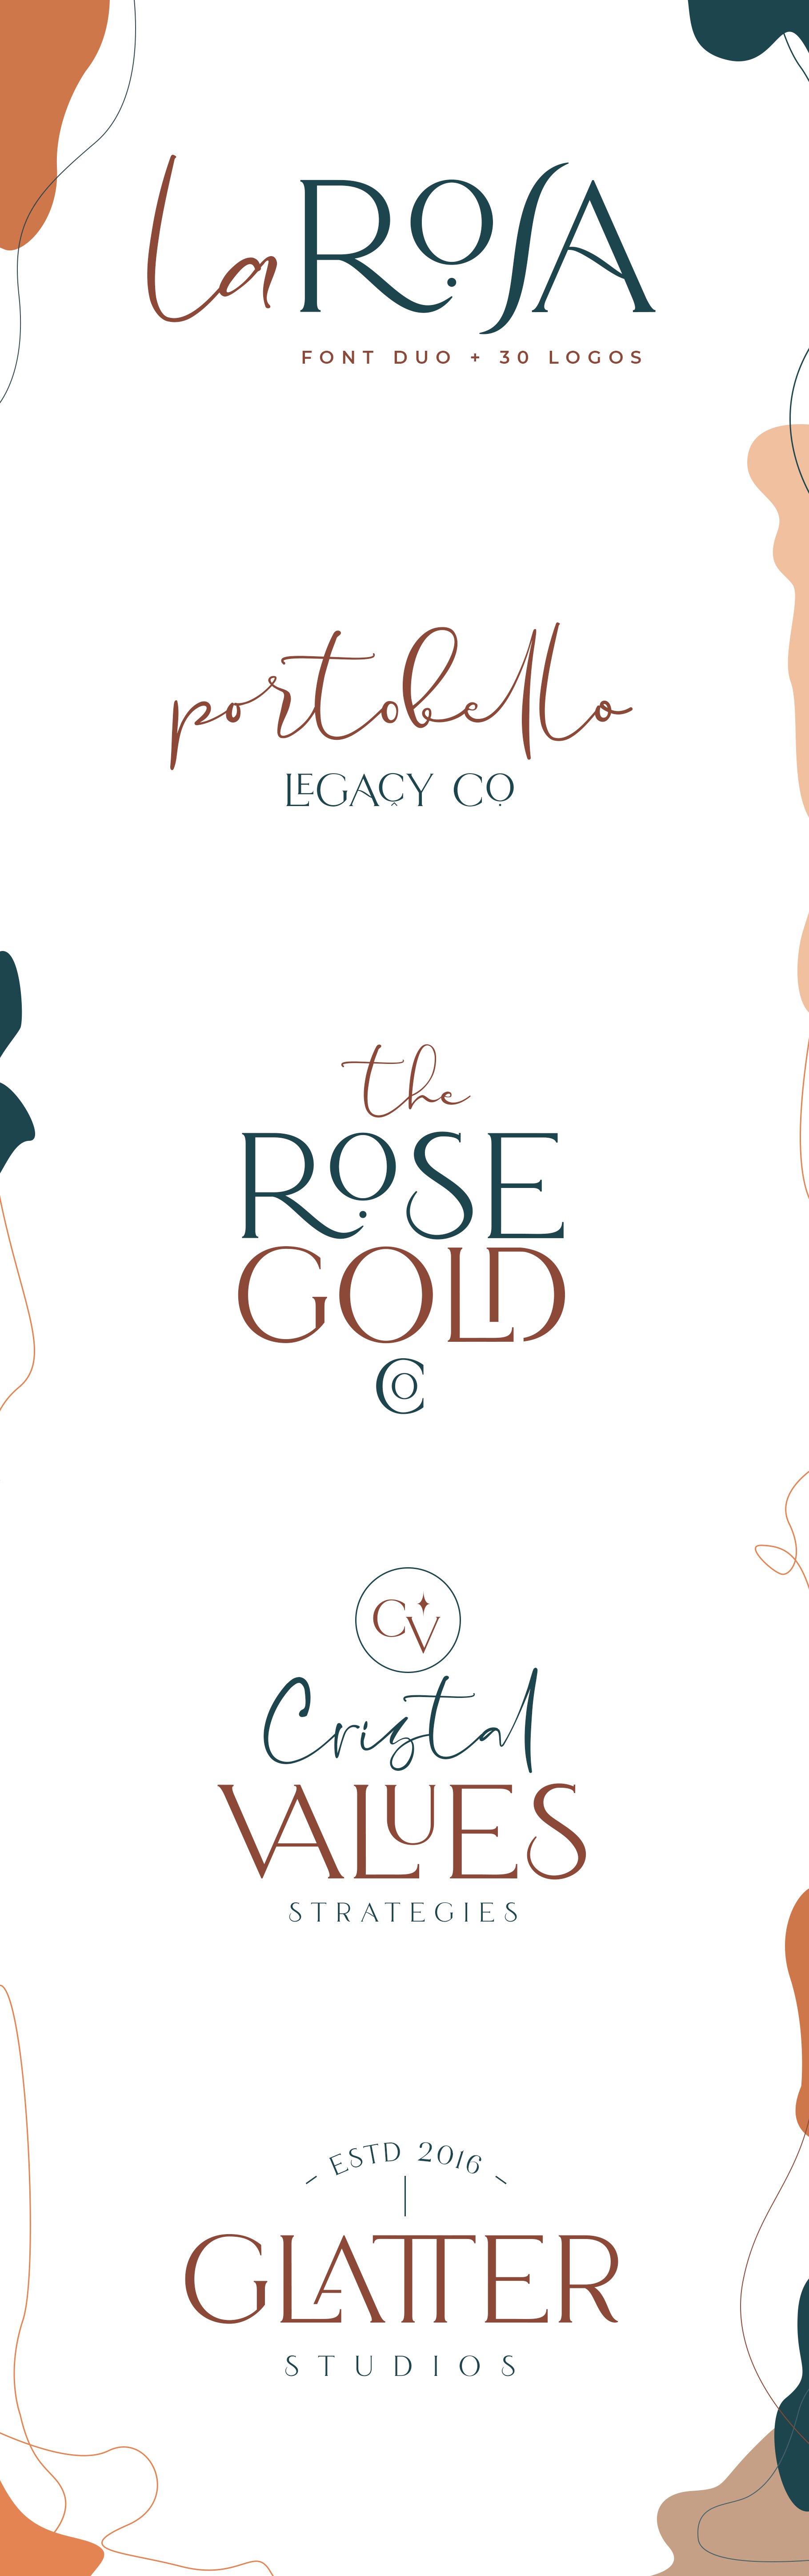 La Rosa Font Duo//Chic Logos cover image.